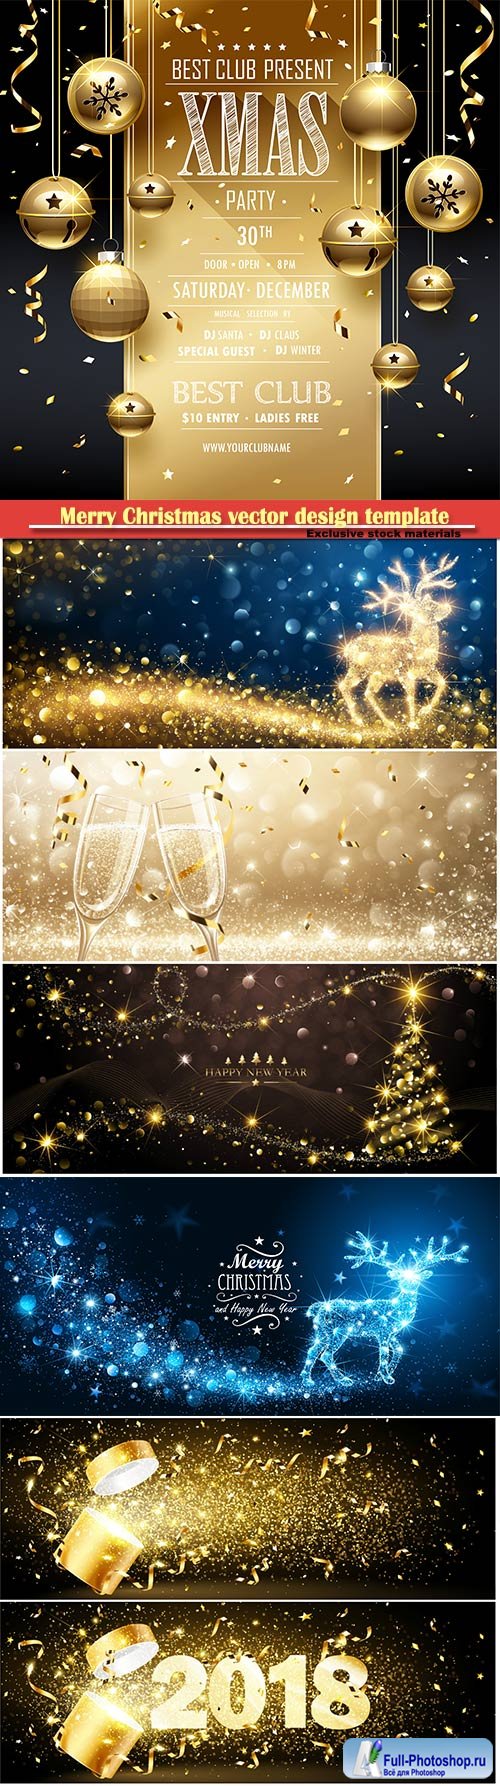 Merry Christmas vector golden design template